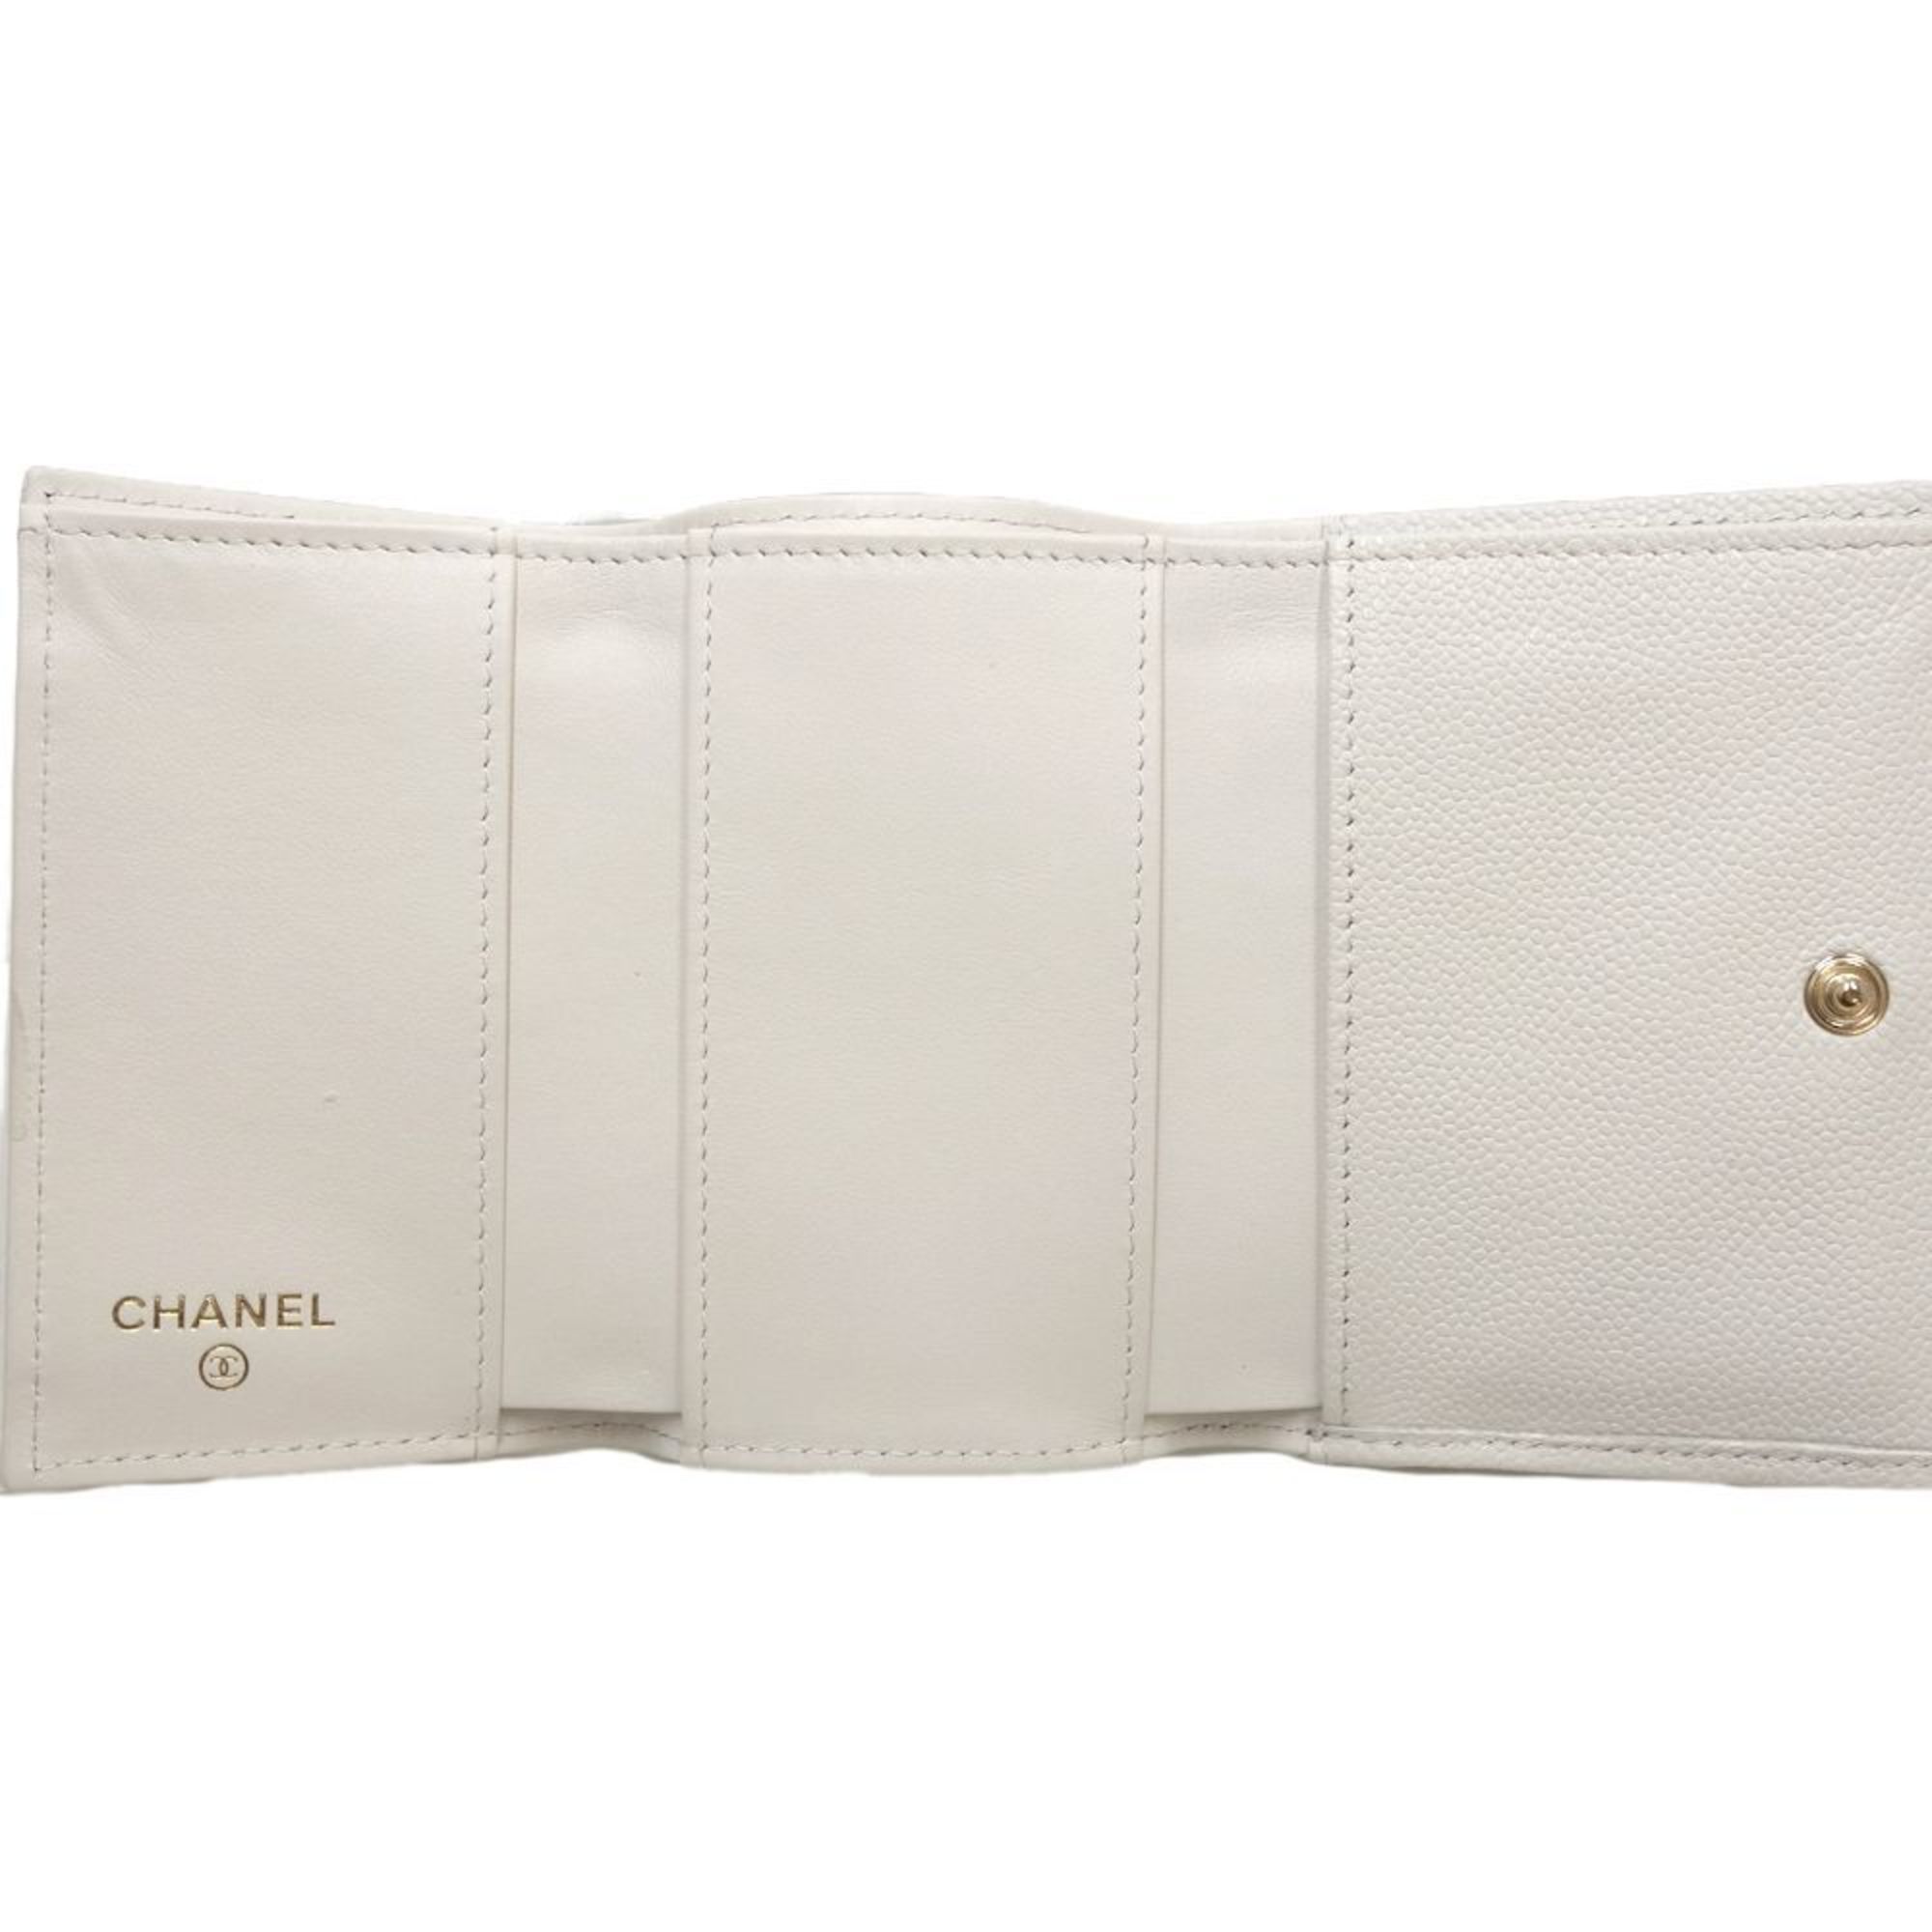 CHANEL Classic Small Wallet Coco Mark A84401 Trifold Caviar Skin White 180282